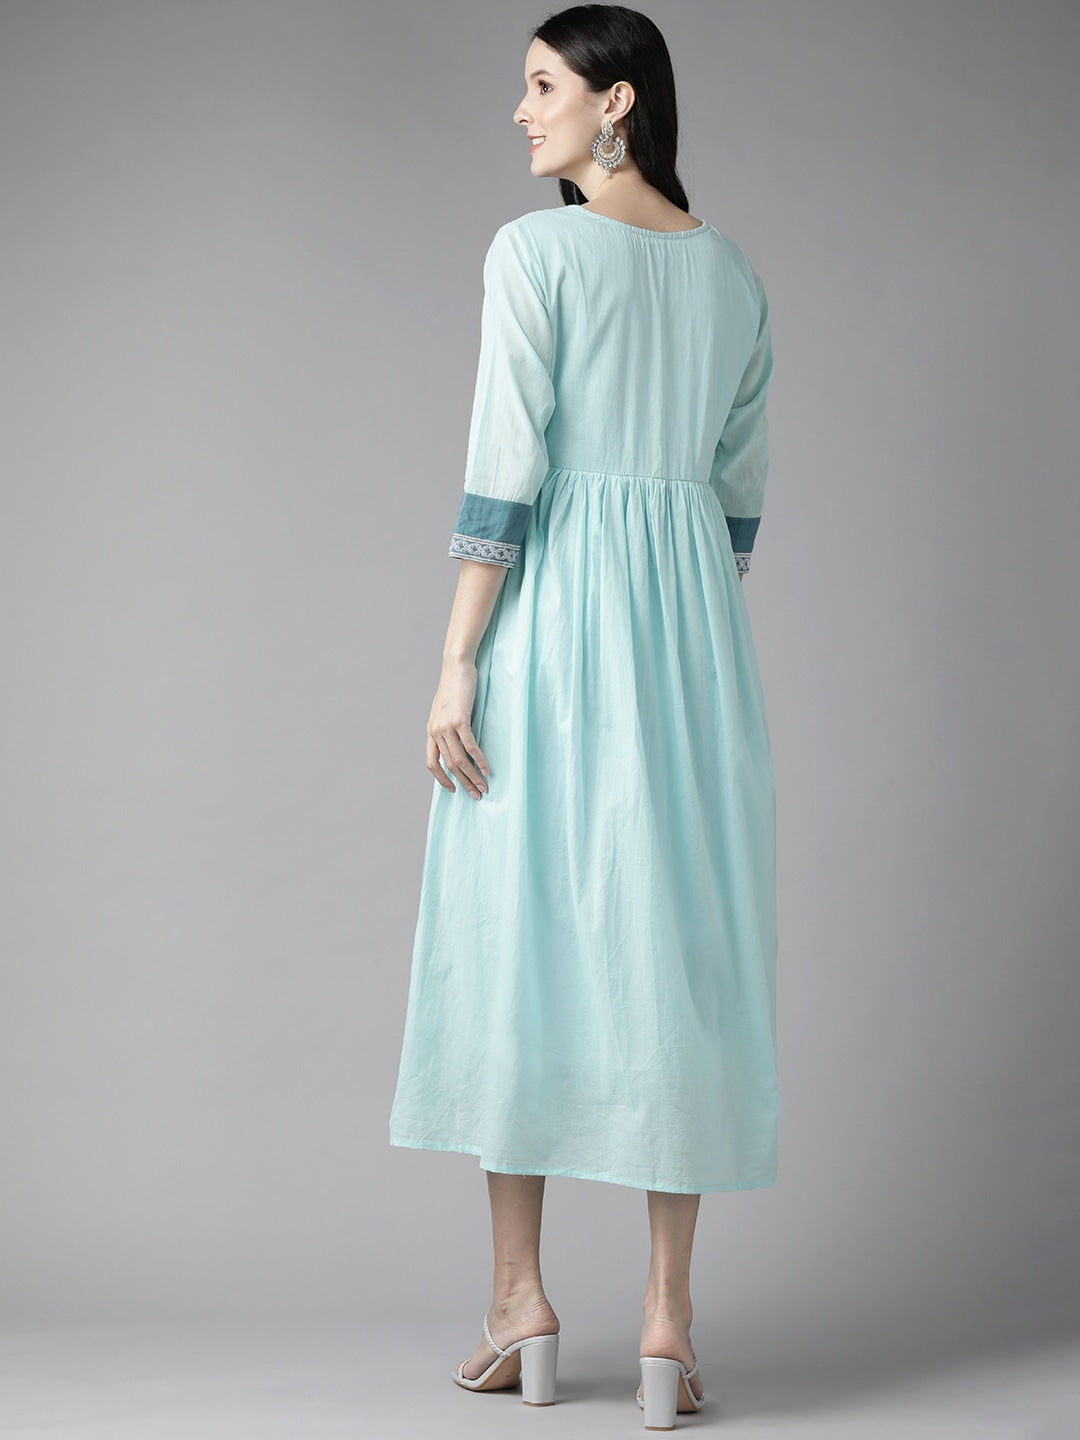 Blue Embroidered Midi Dress-Yufta Store-2752DRSSBM